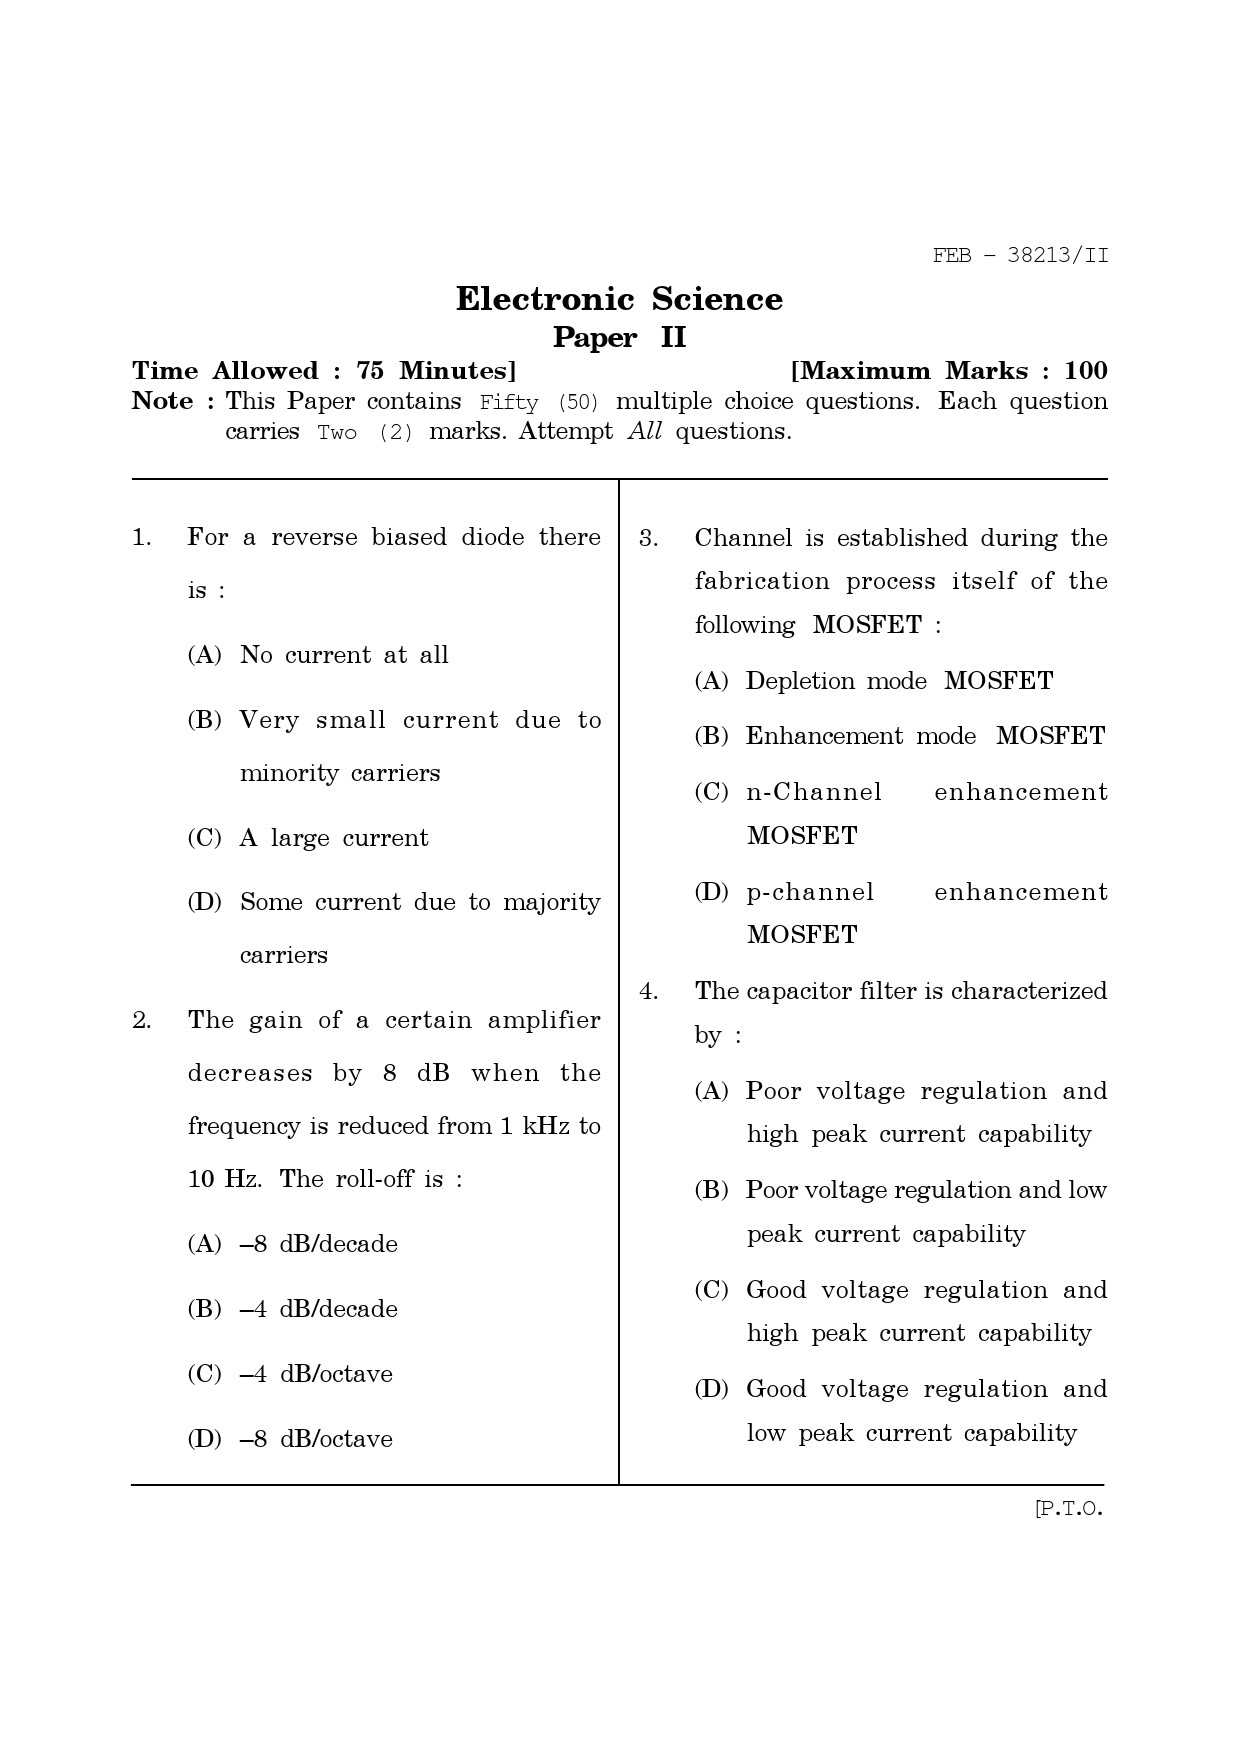 Maharashtra SET Electronics Science Question Paper II February 2013 1